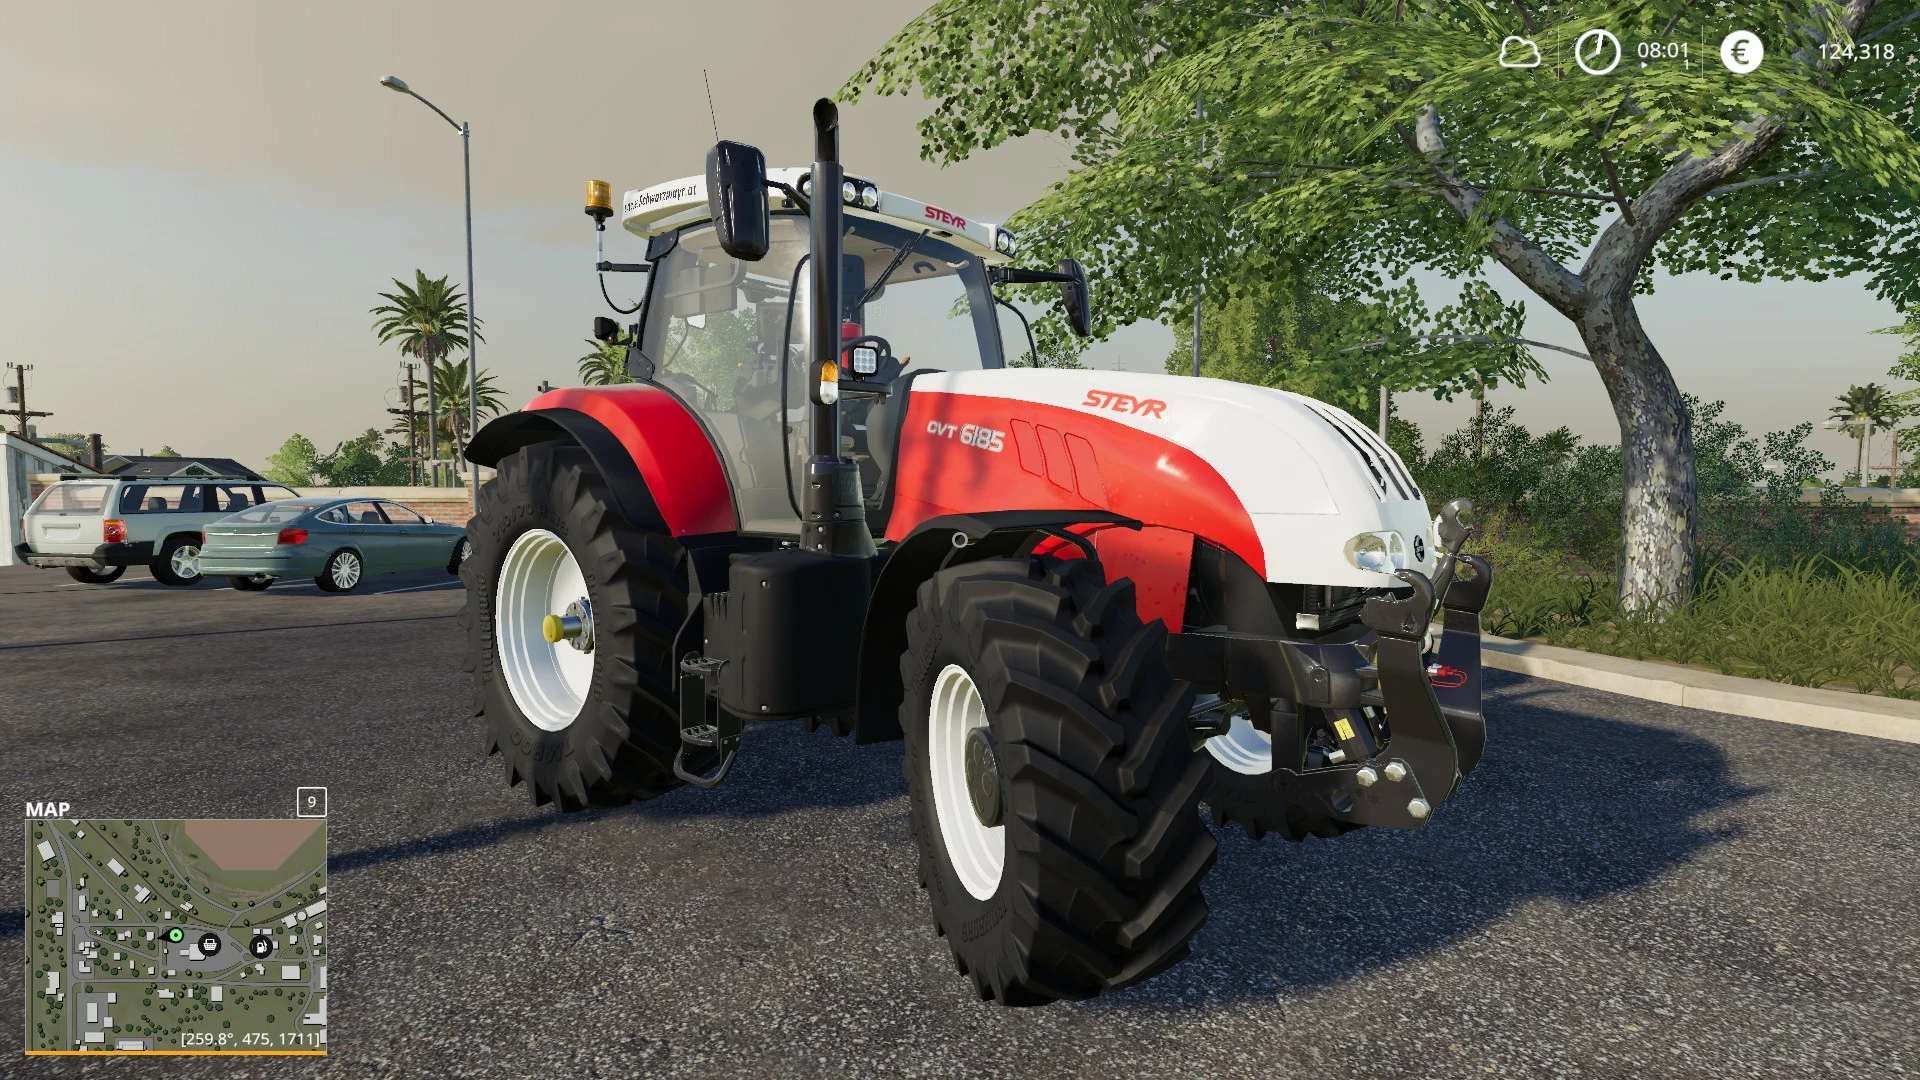 Steyr Tractor Pack V10 Fs19 Farming Simulator 19 Mod Fs19 Mod Images And Photos Finder 5188